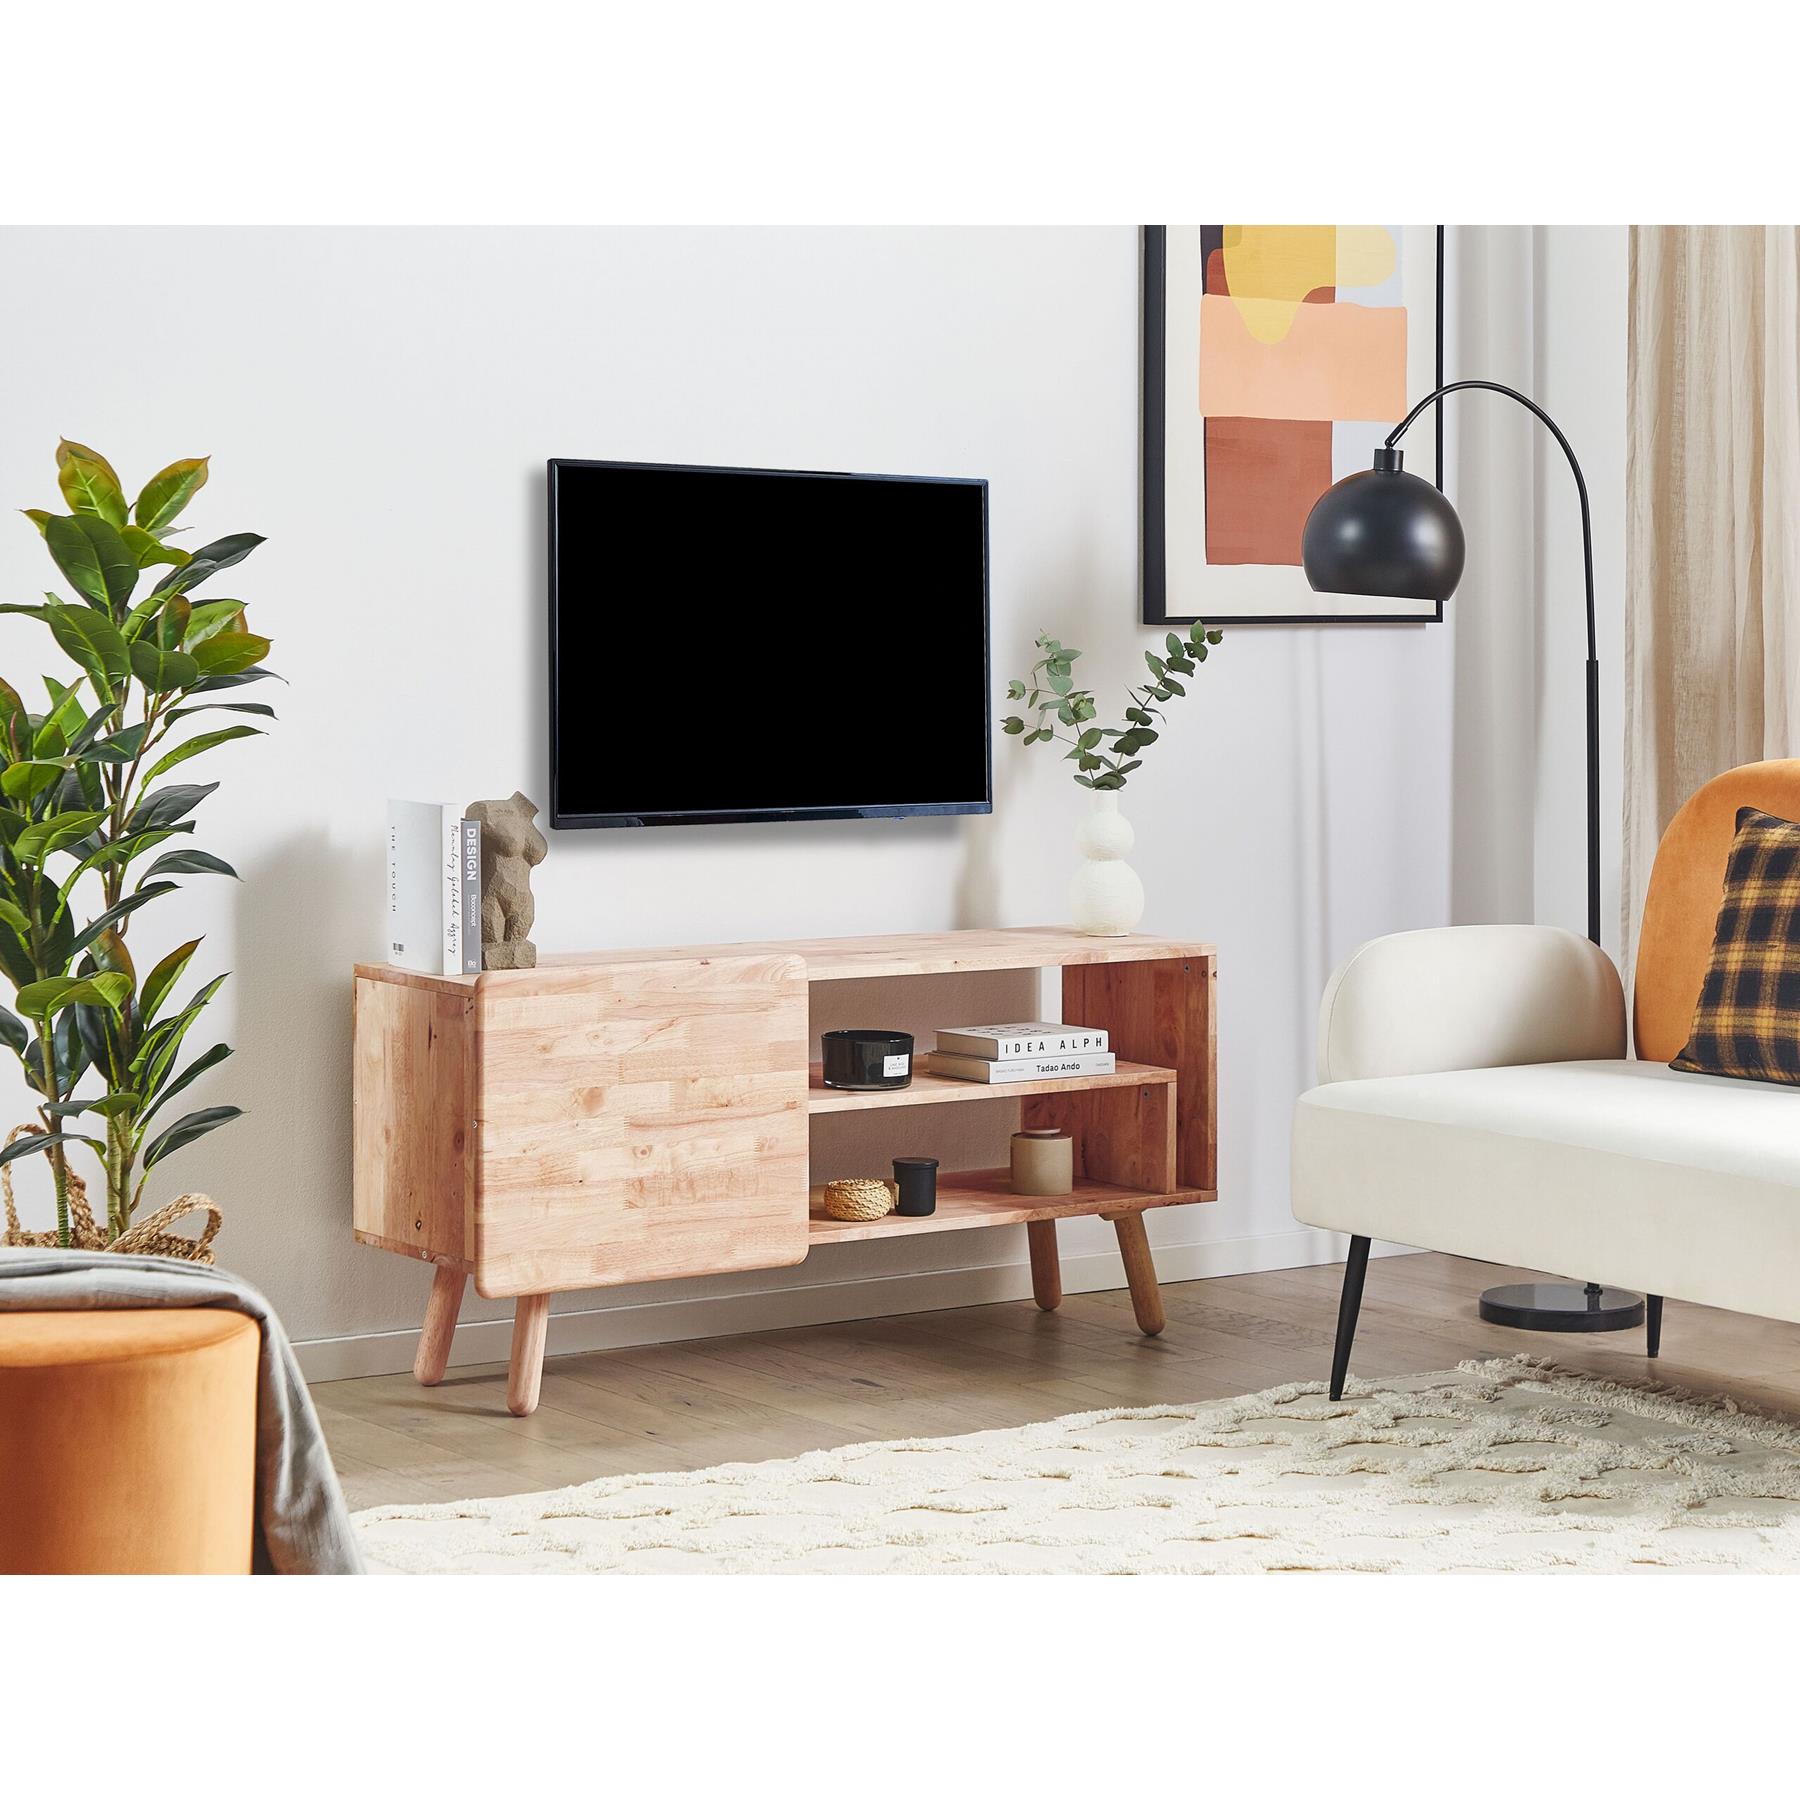 bod Oceaan Cirkel Beliani WESTFIELD TV-meubel lichte houtkleur kopen? Shop bij fonQ!